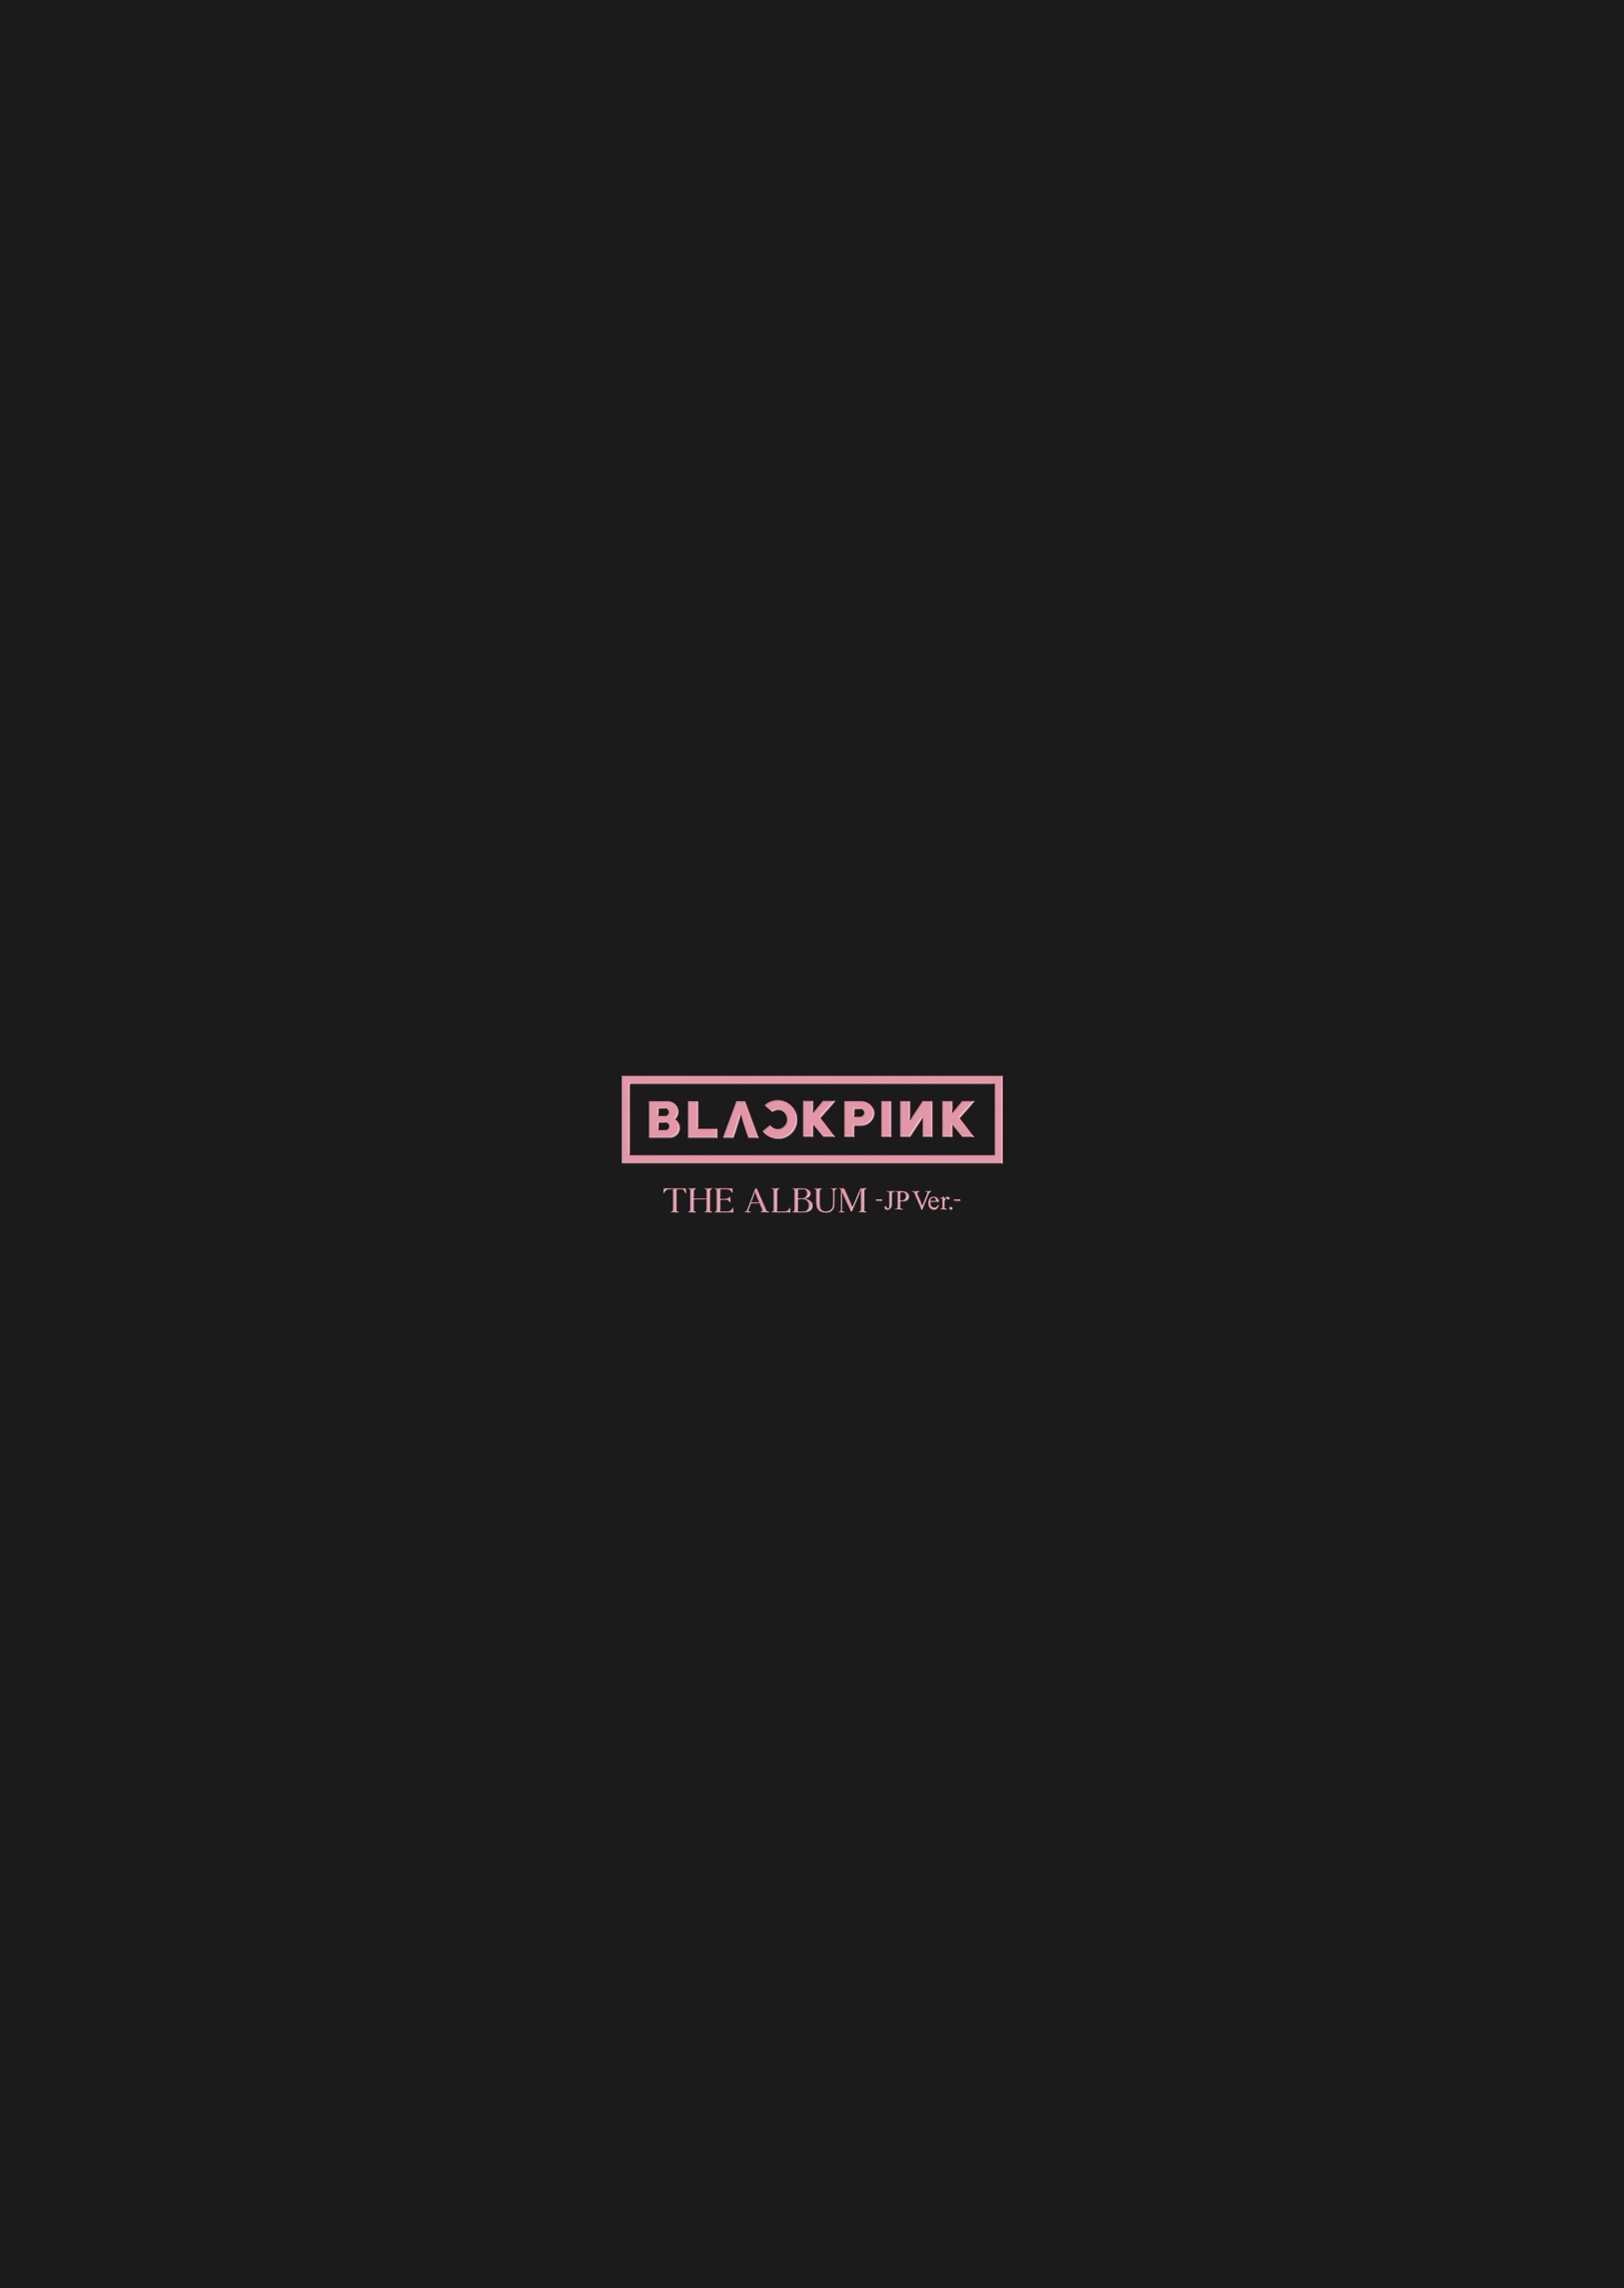 DISC - ブラックピンク（BLACKPINK）オフィシャルサイト